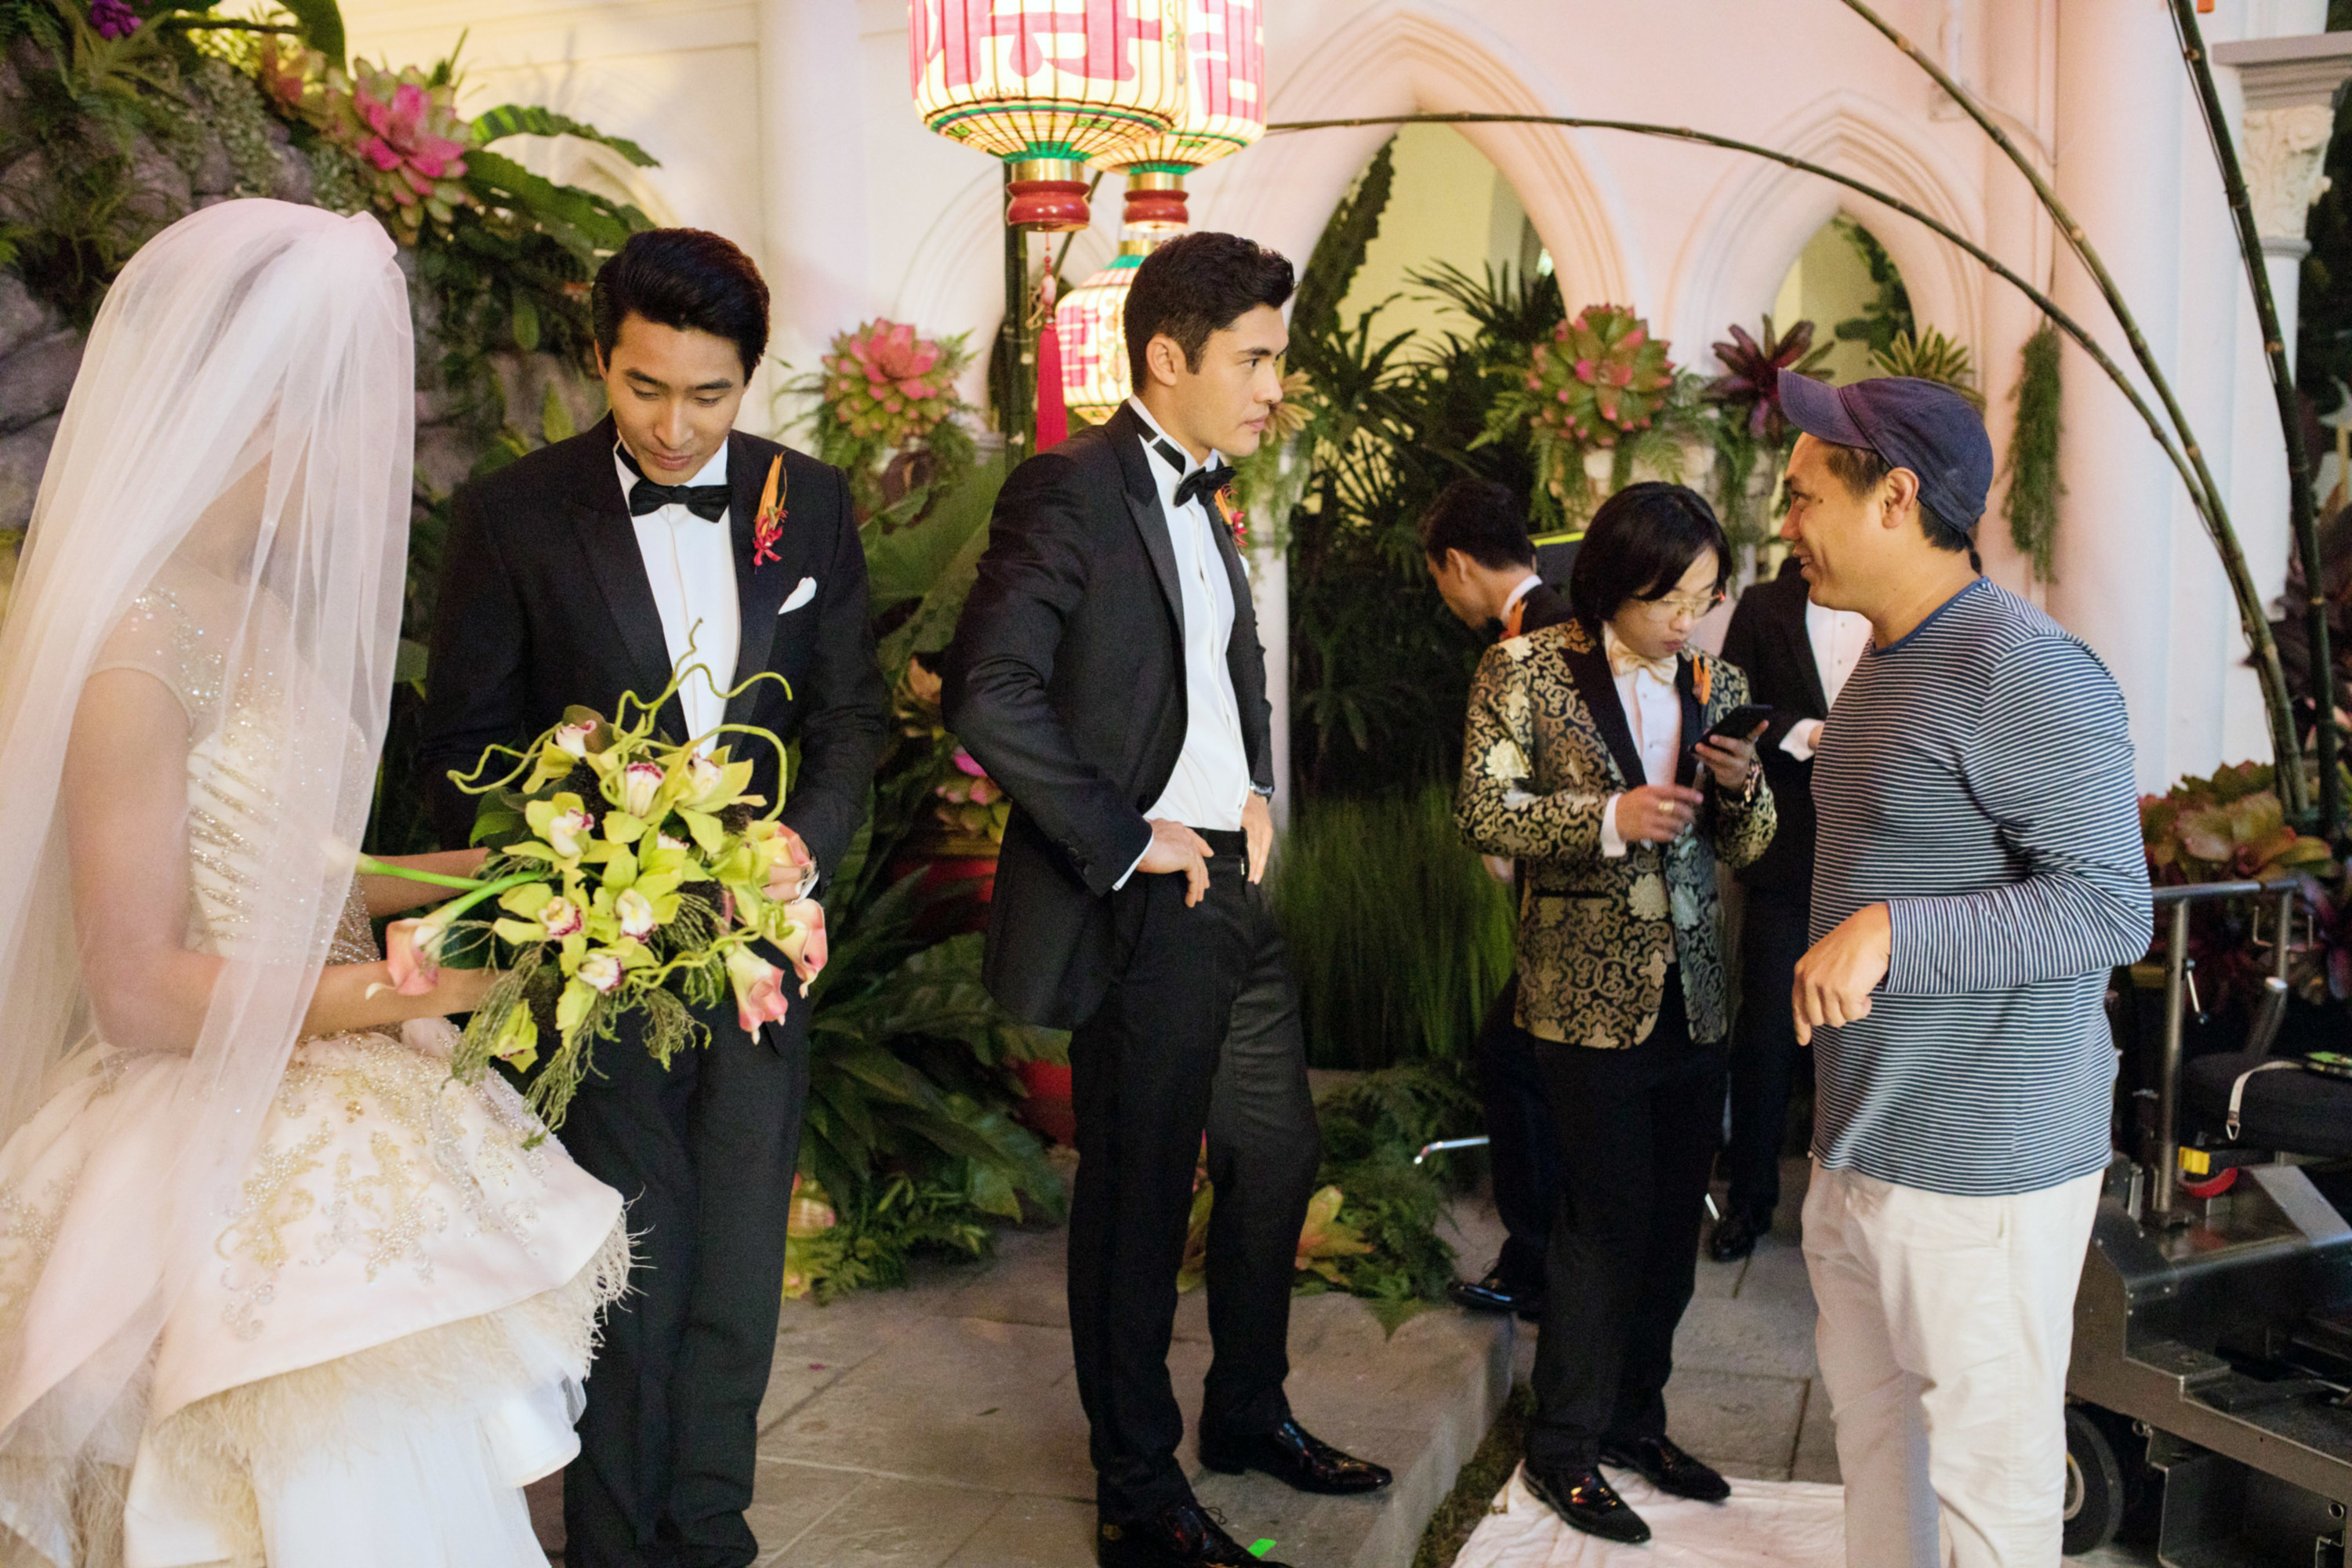 Behind-the-scenes of Crazy Rich Asians&#x27; wedding scene